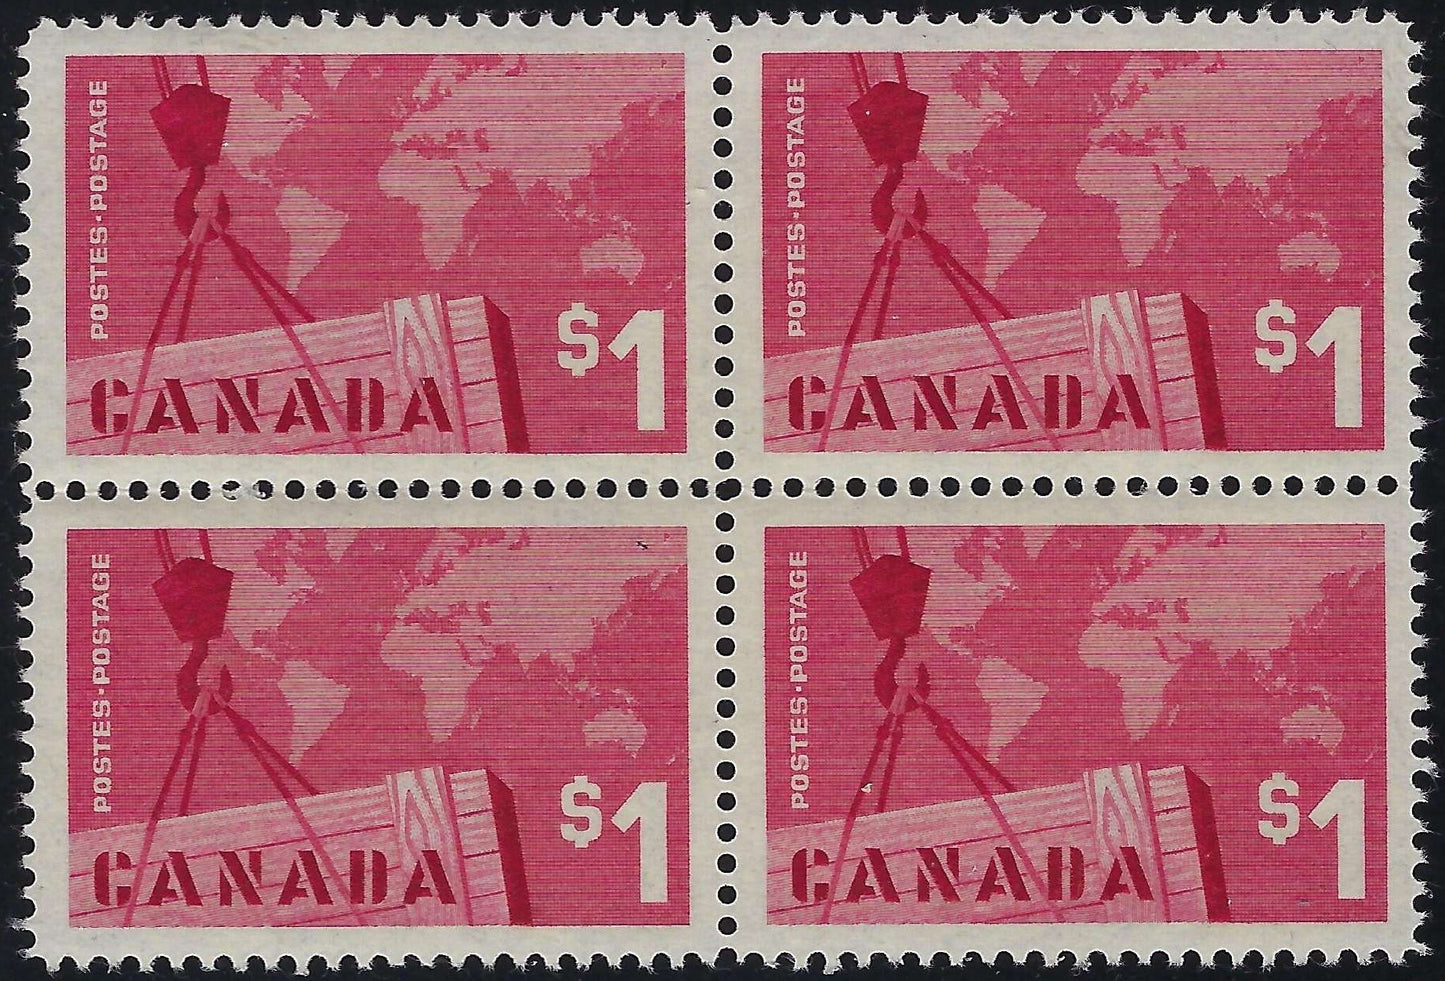 Canada 411 - 1963 $1 Canadian Exports Block, VF-NH